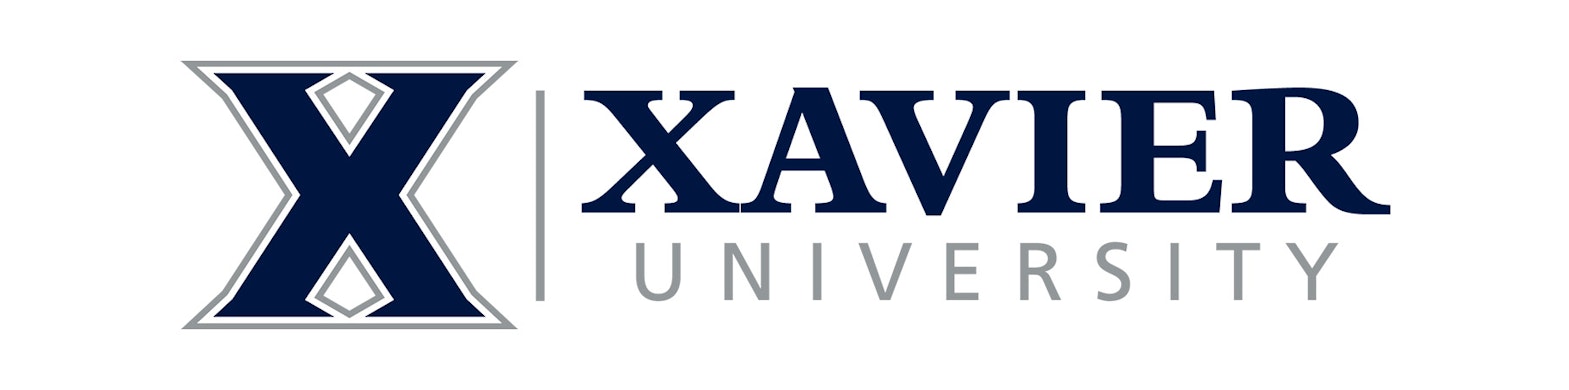 Xavier University Athletics Auction